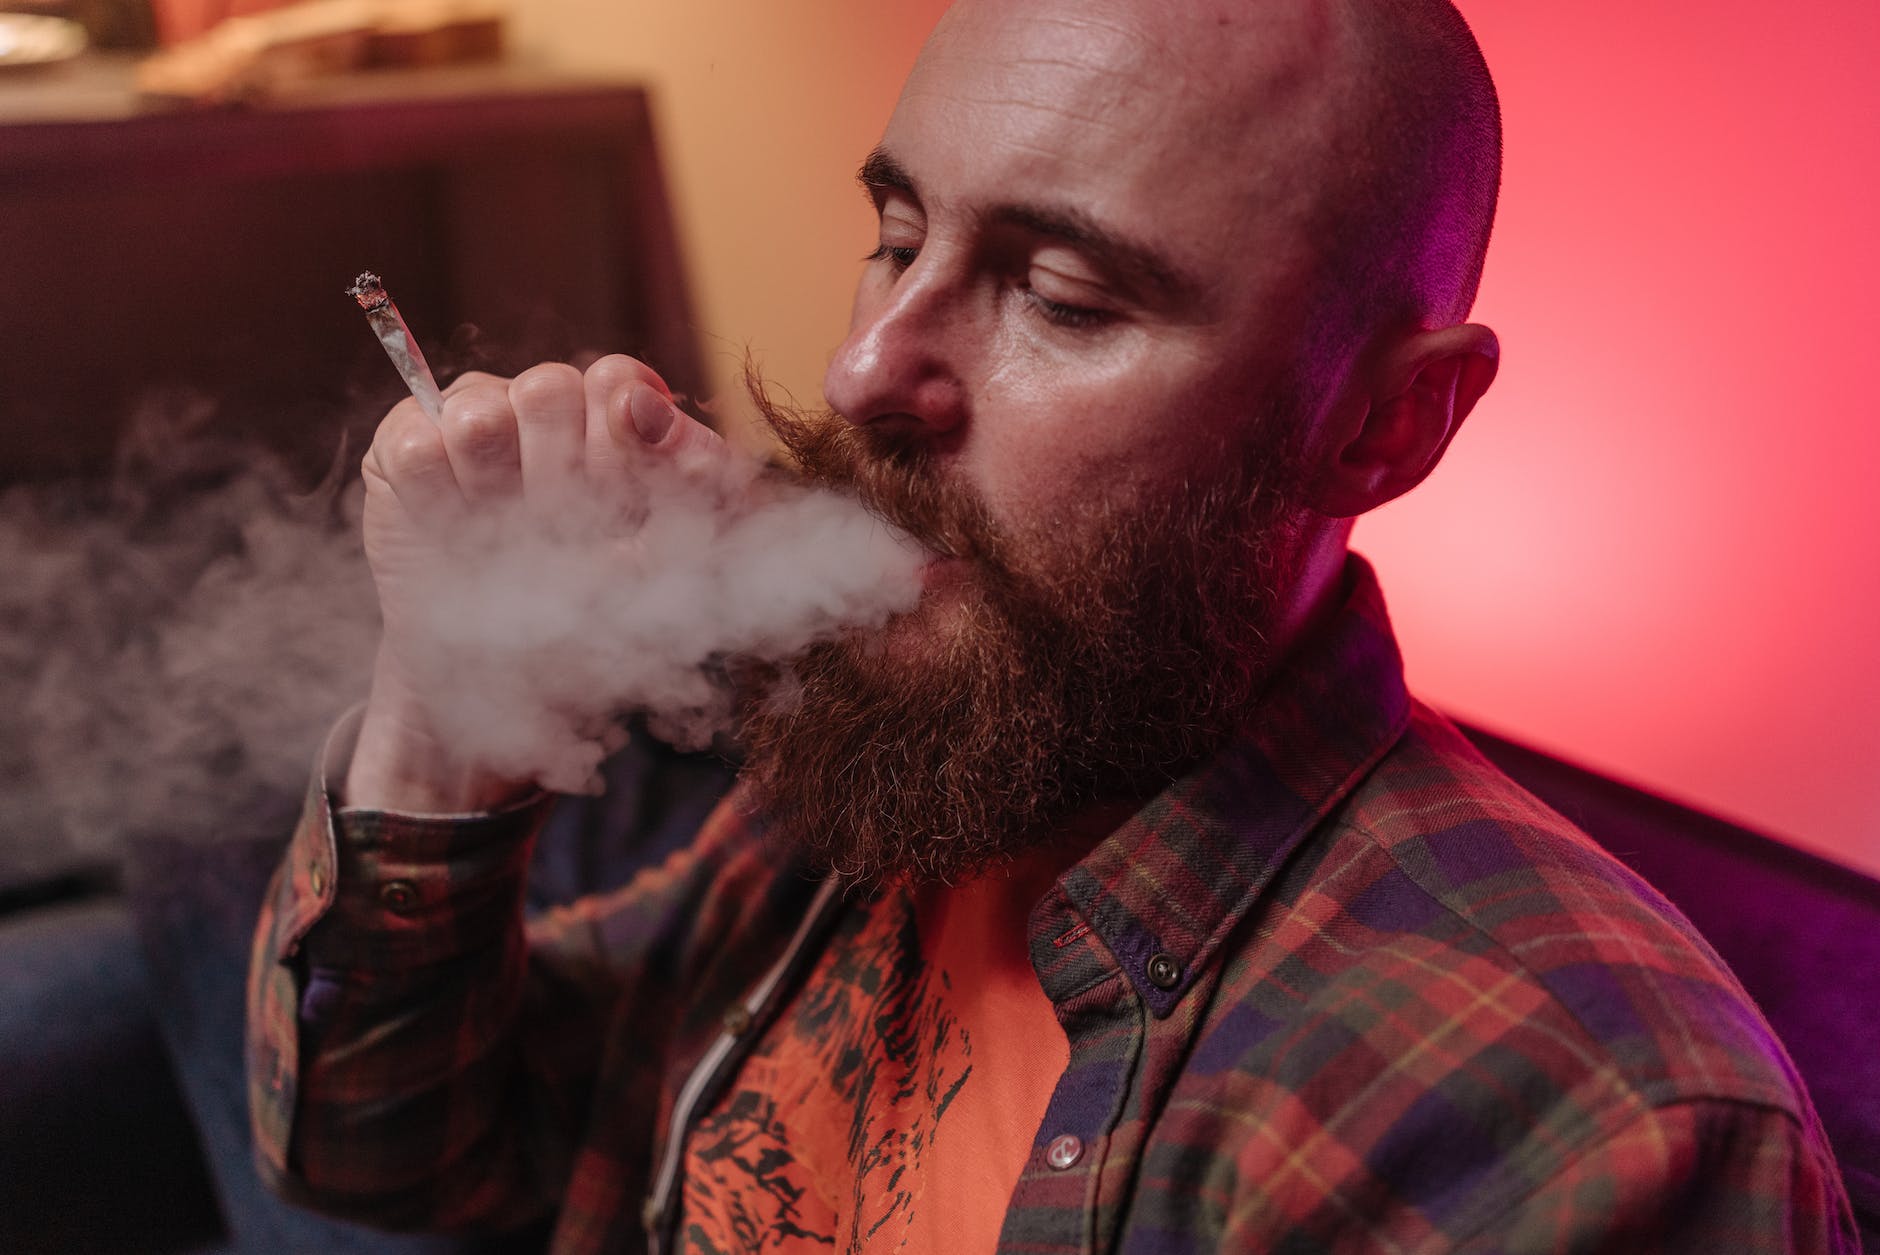 close up photo of a man smoking a joint